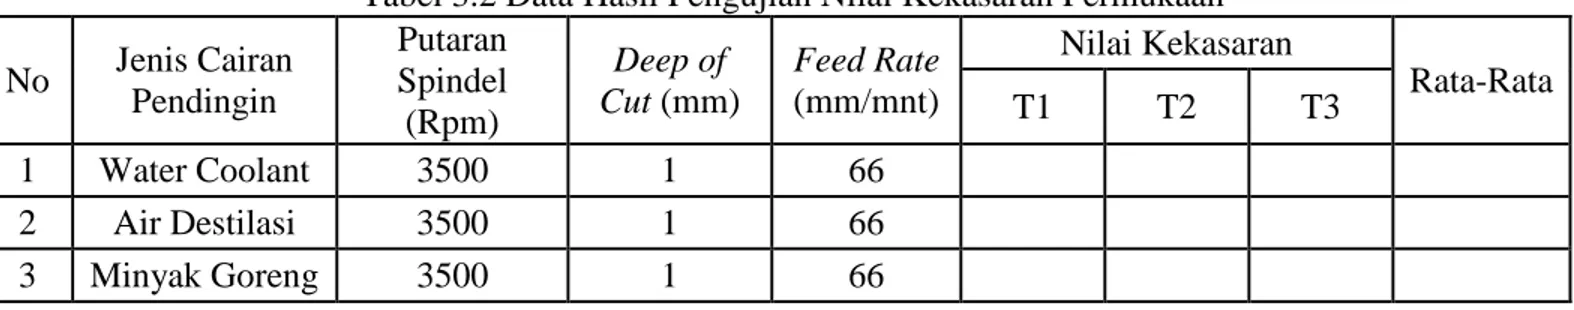 Tabel 3.2 Data Hasil Pengujian Nilai Kekasaran Permukaan  No  Jenis Cairan  Pendingin  Putaran  Spindel  (Rpm)  Deep of  Cut (mm)  Feed Rate (mm/mnt)  Nilai Kekasaran  Rata-Rata T1 T2 T3  1  Water Coolant  3500  1  66              2  Air Destilasi  3500  1